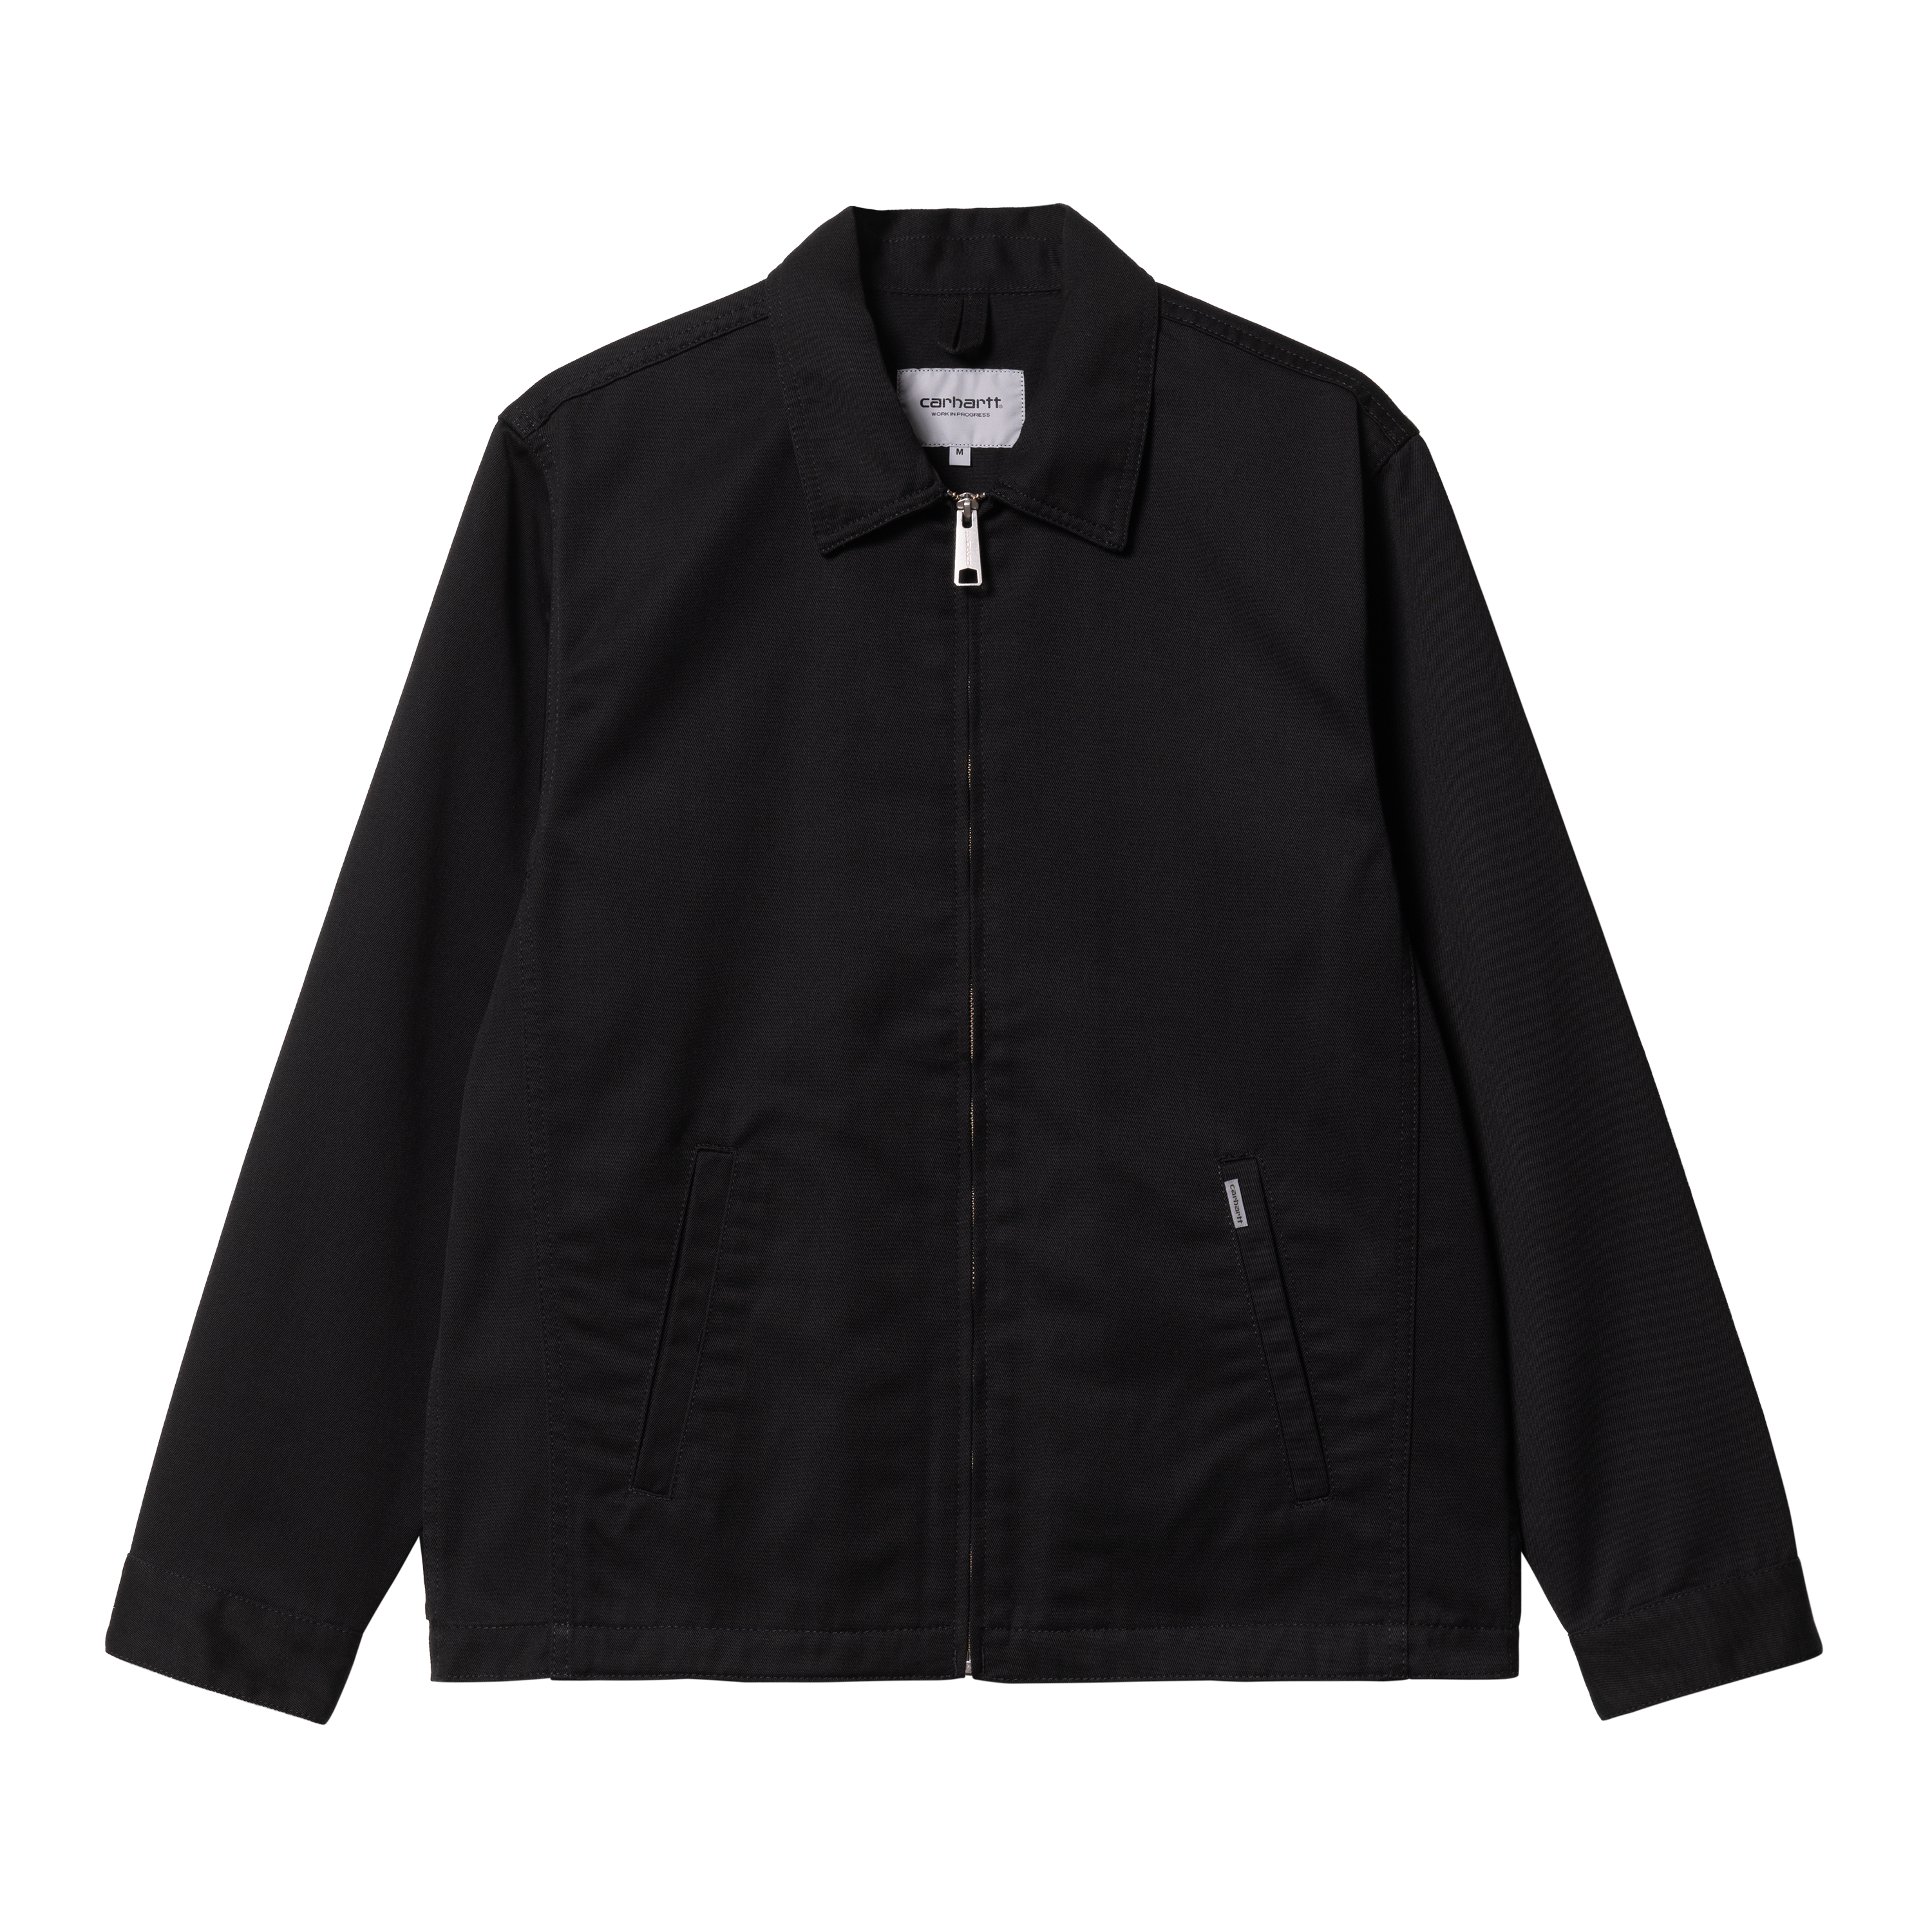 Carhartt WIP Modular Jacket in Black